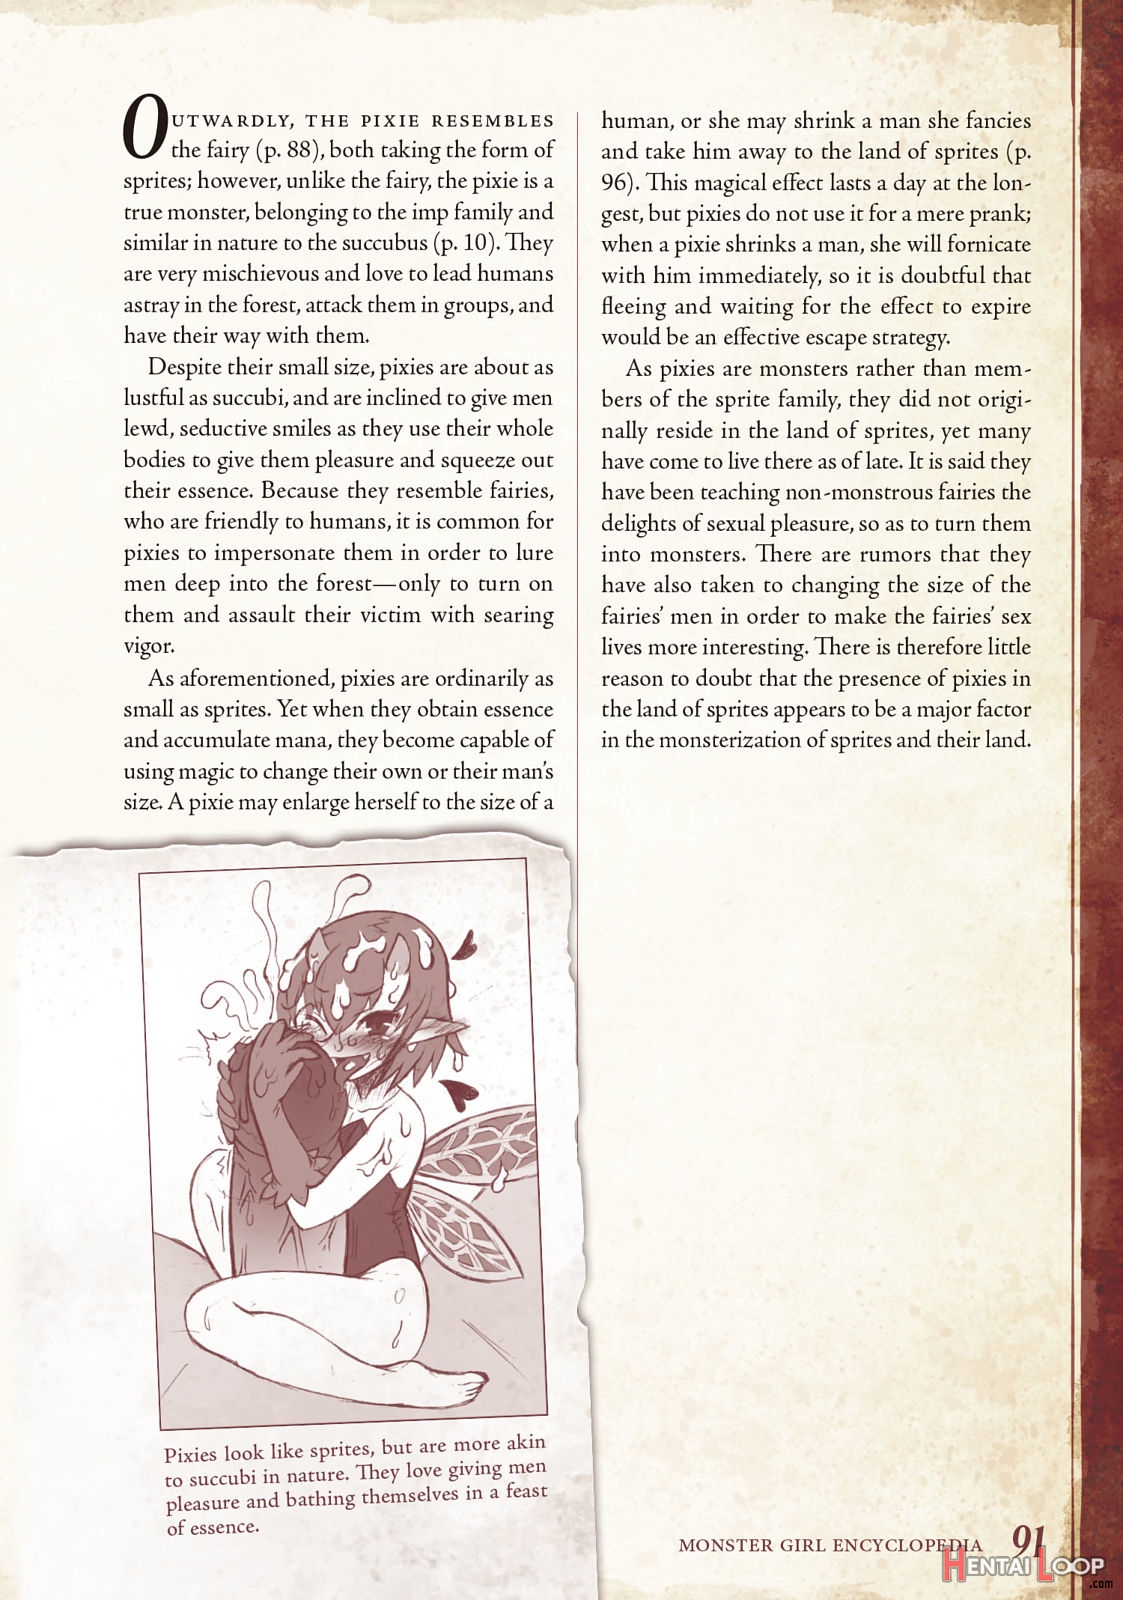 Monster Girl Encyclopedia Vol. 1 page 92